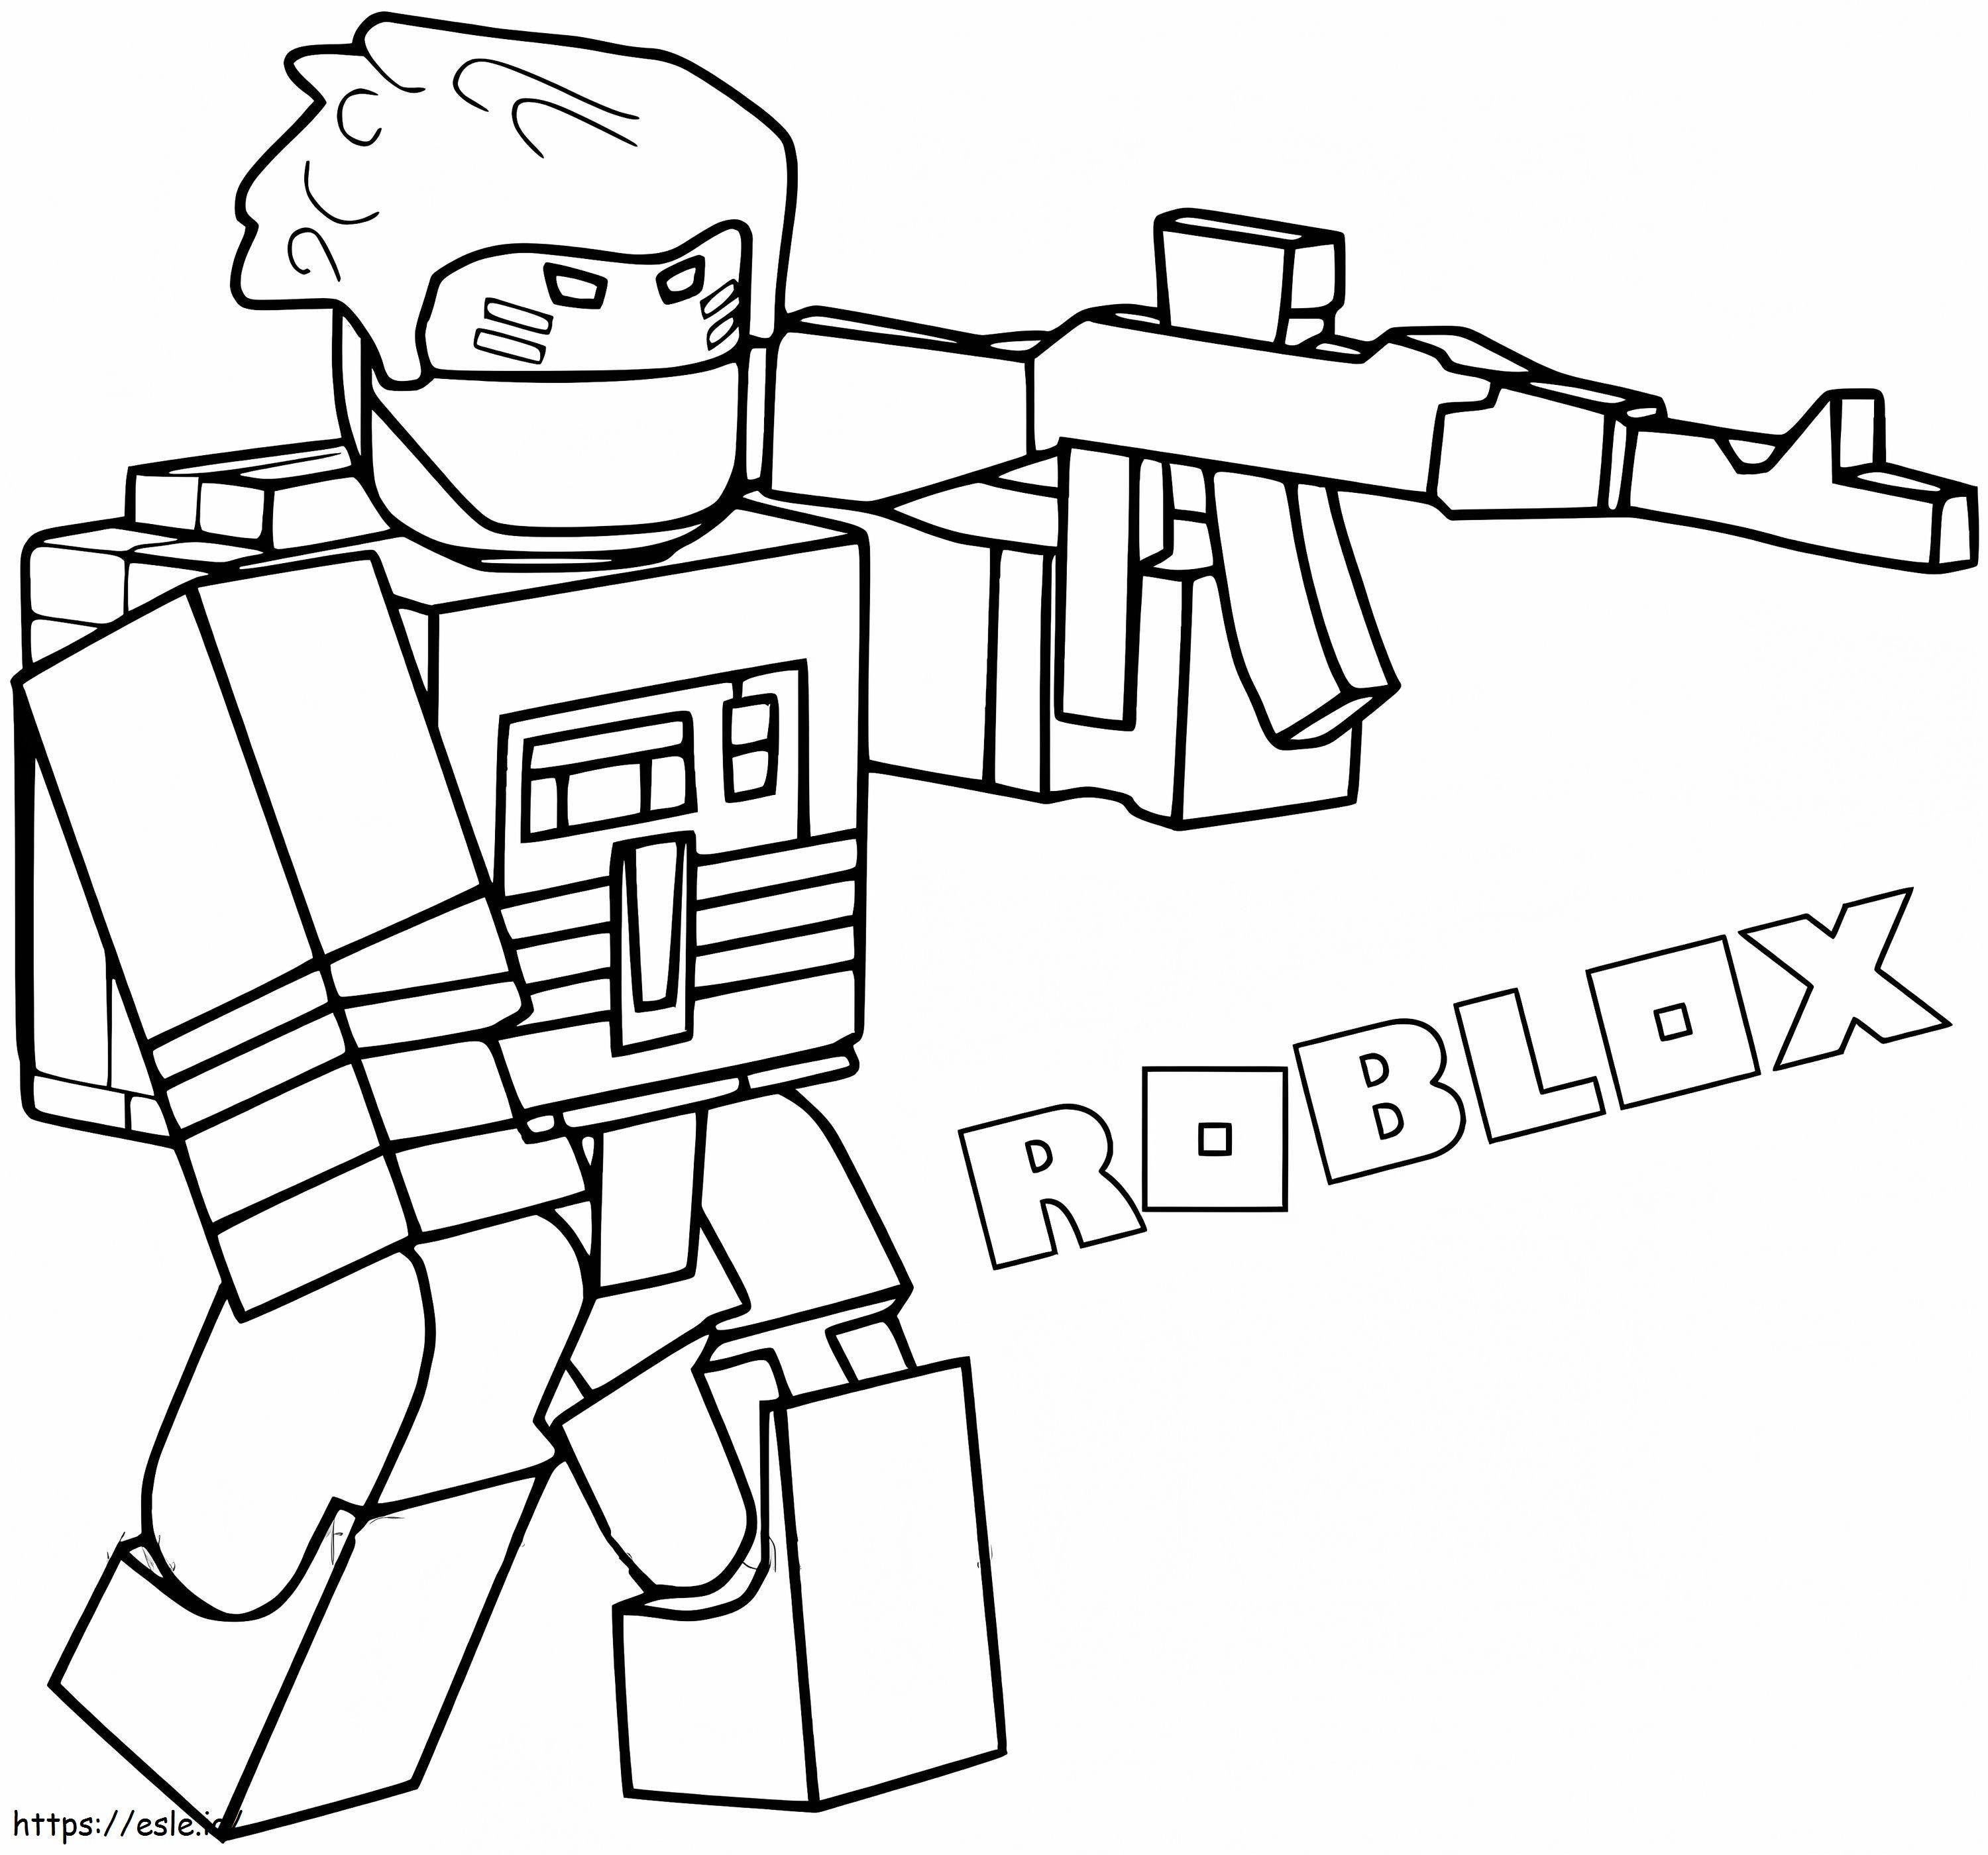 Roblox-personage met pistool kleurplaat kleurplaat